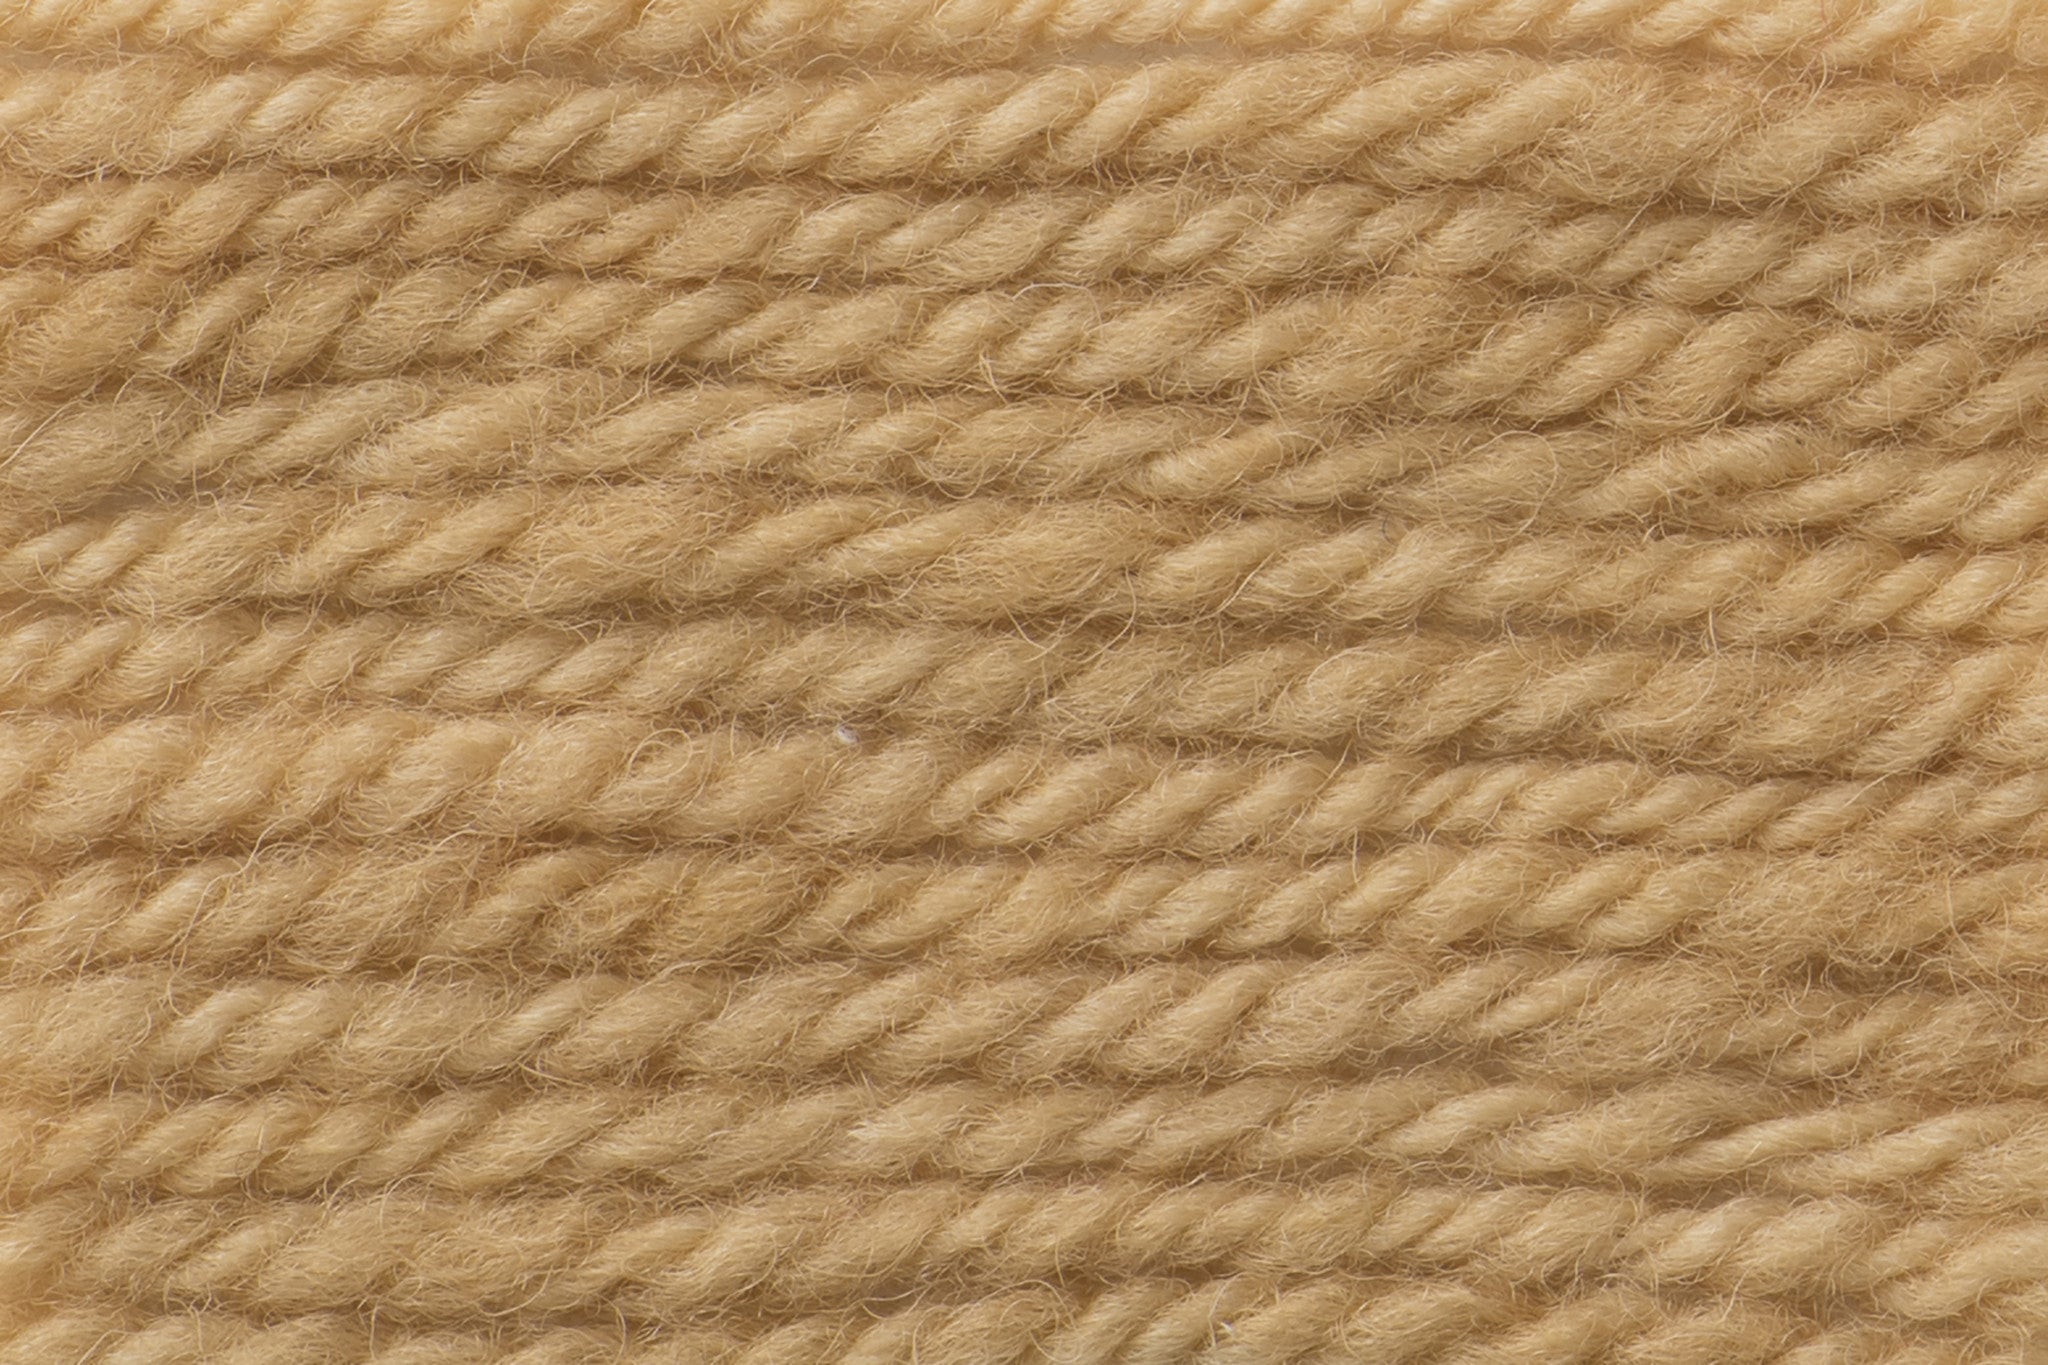 Fleece and Harmony Signature Aran in Plover